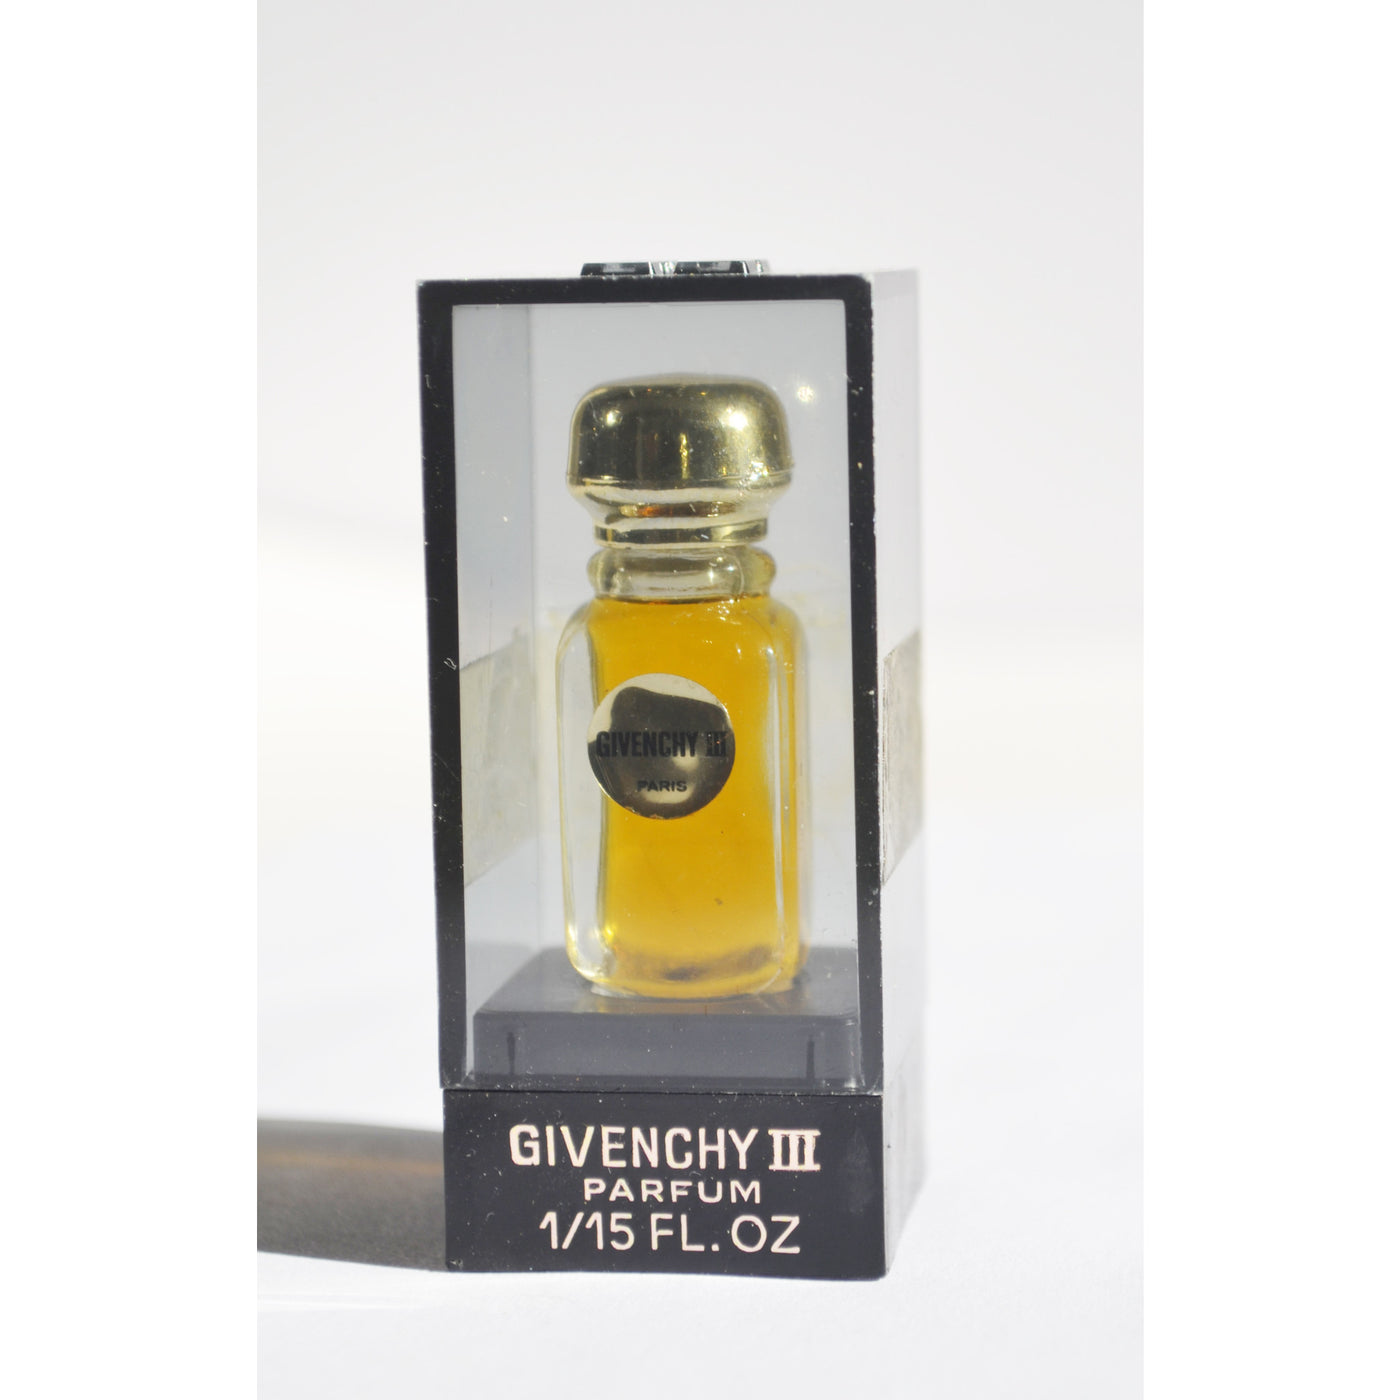 Vintage Givenchy III Parfum Mini